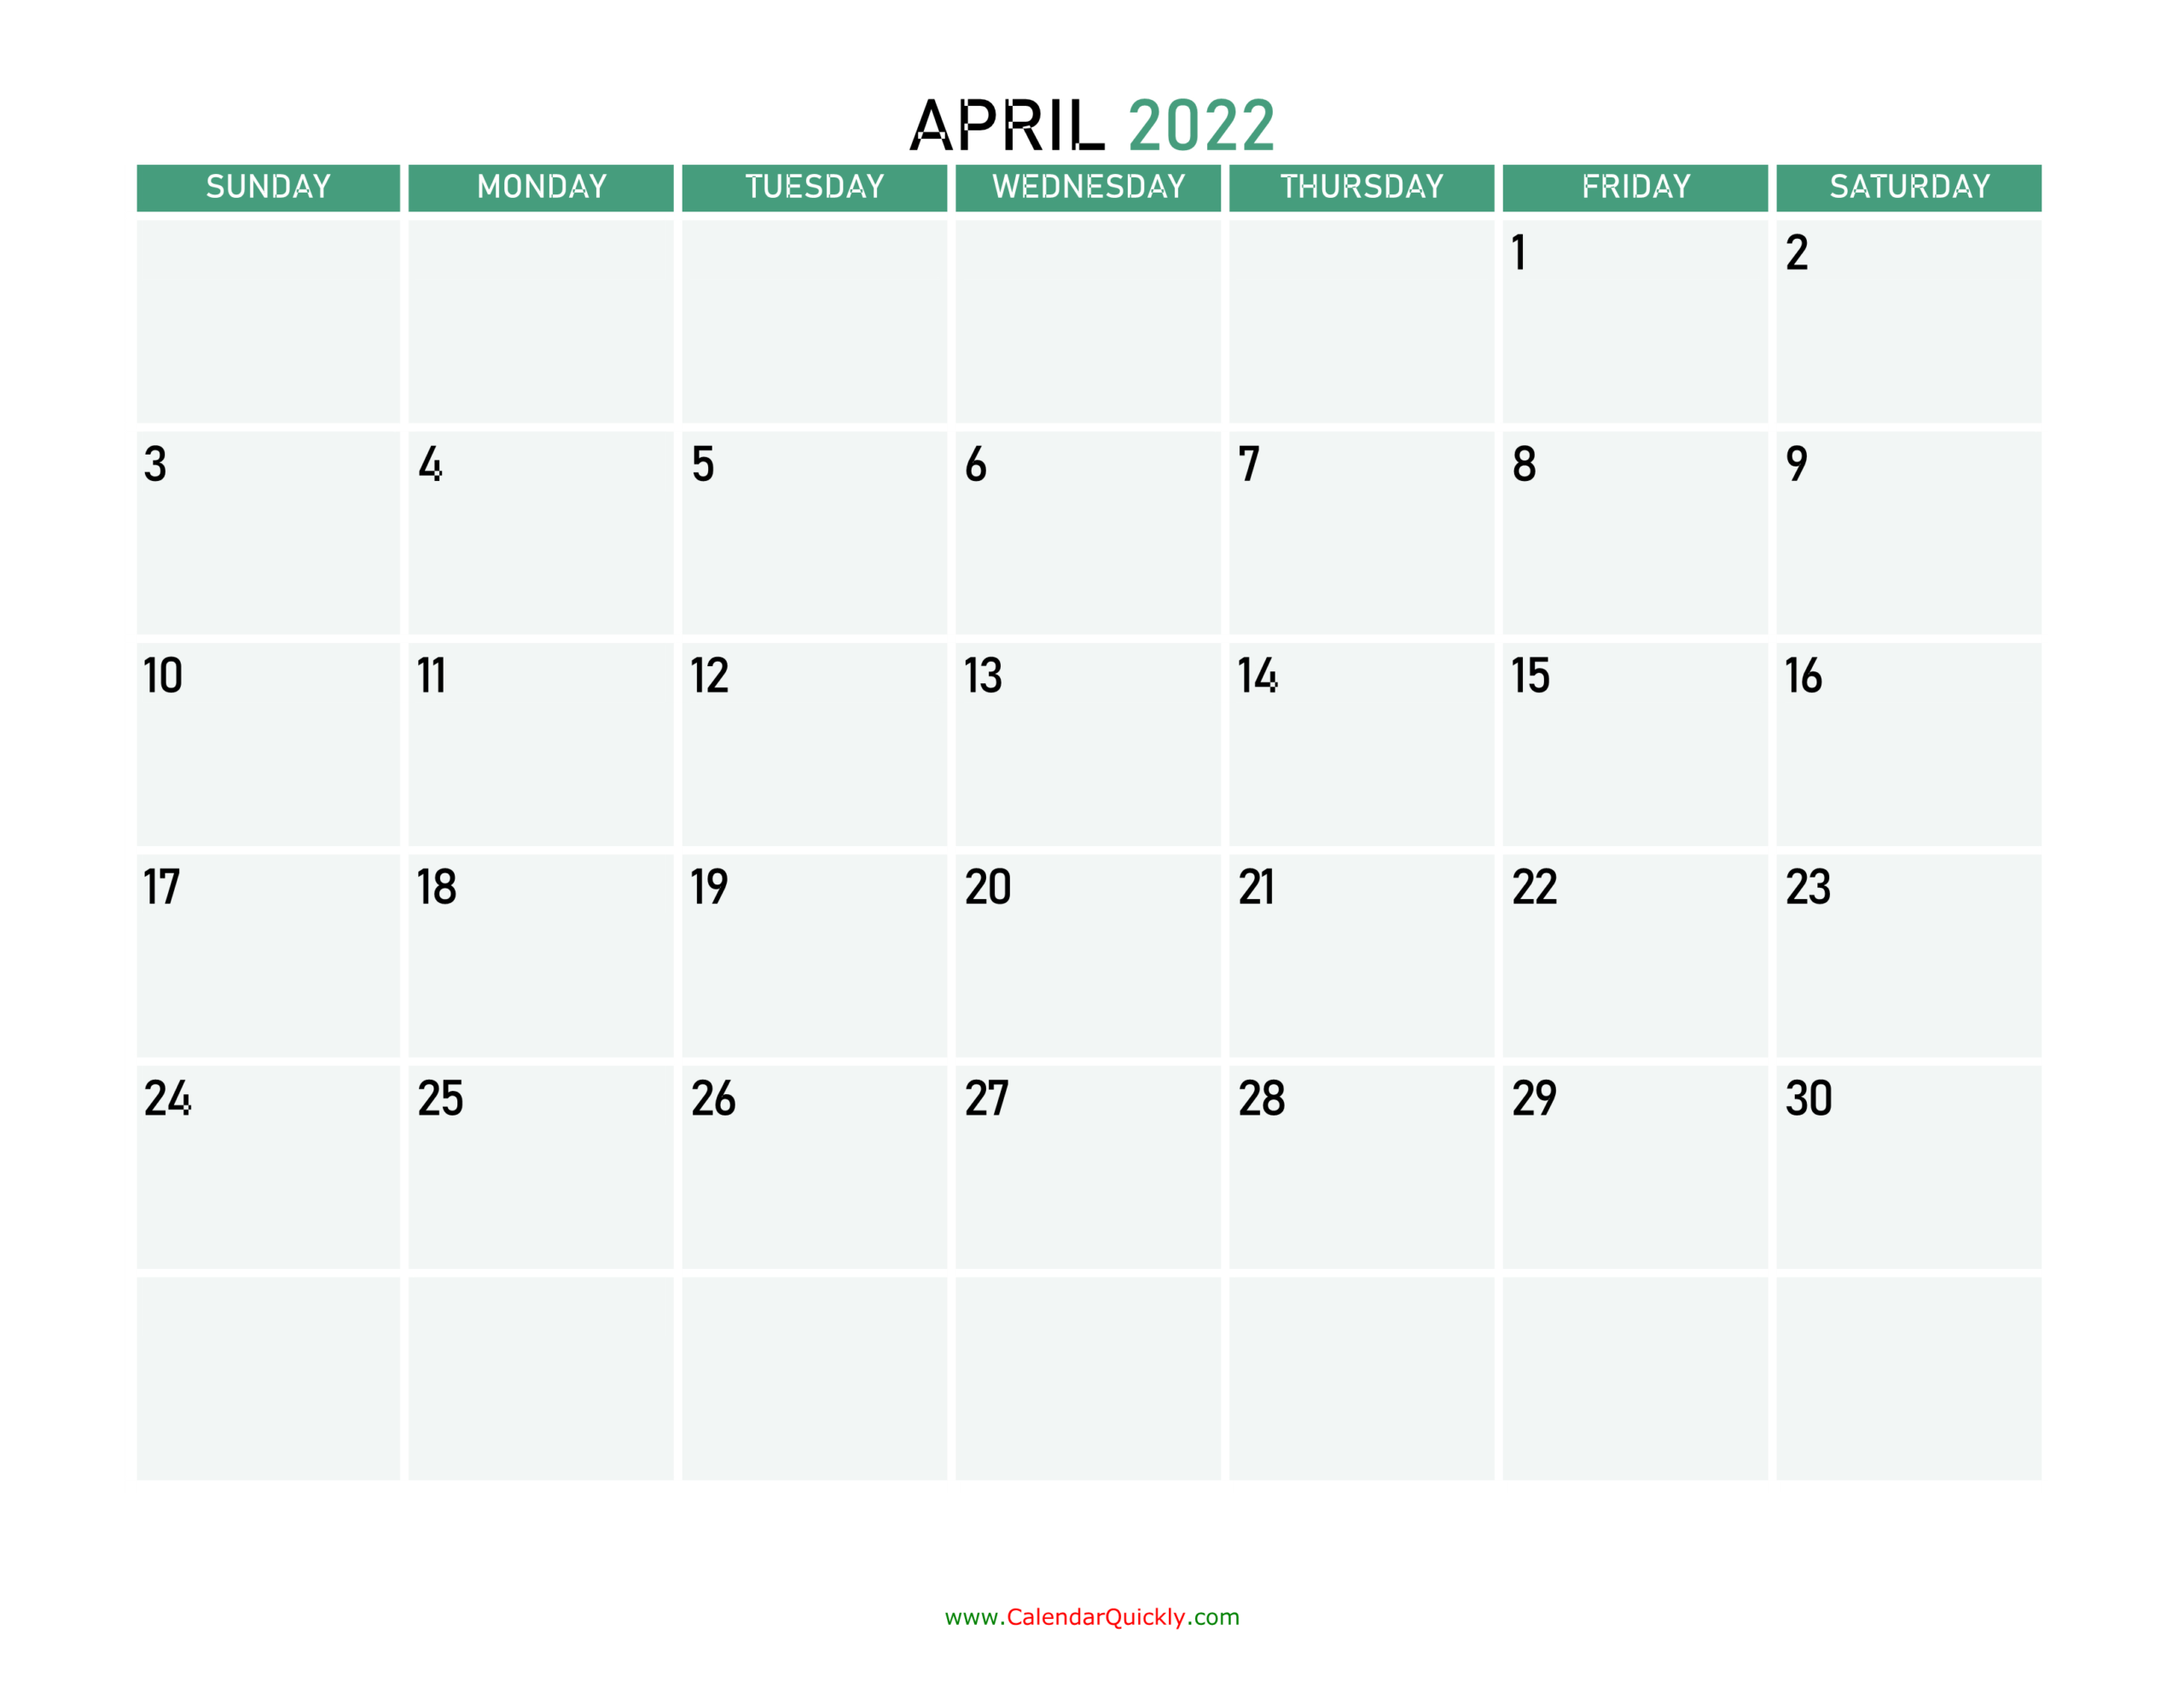 April 2022 Calendars | Calendar Quickly  November 2022 To April 2022 Calendar